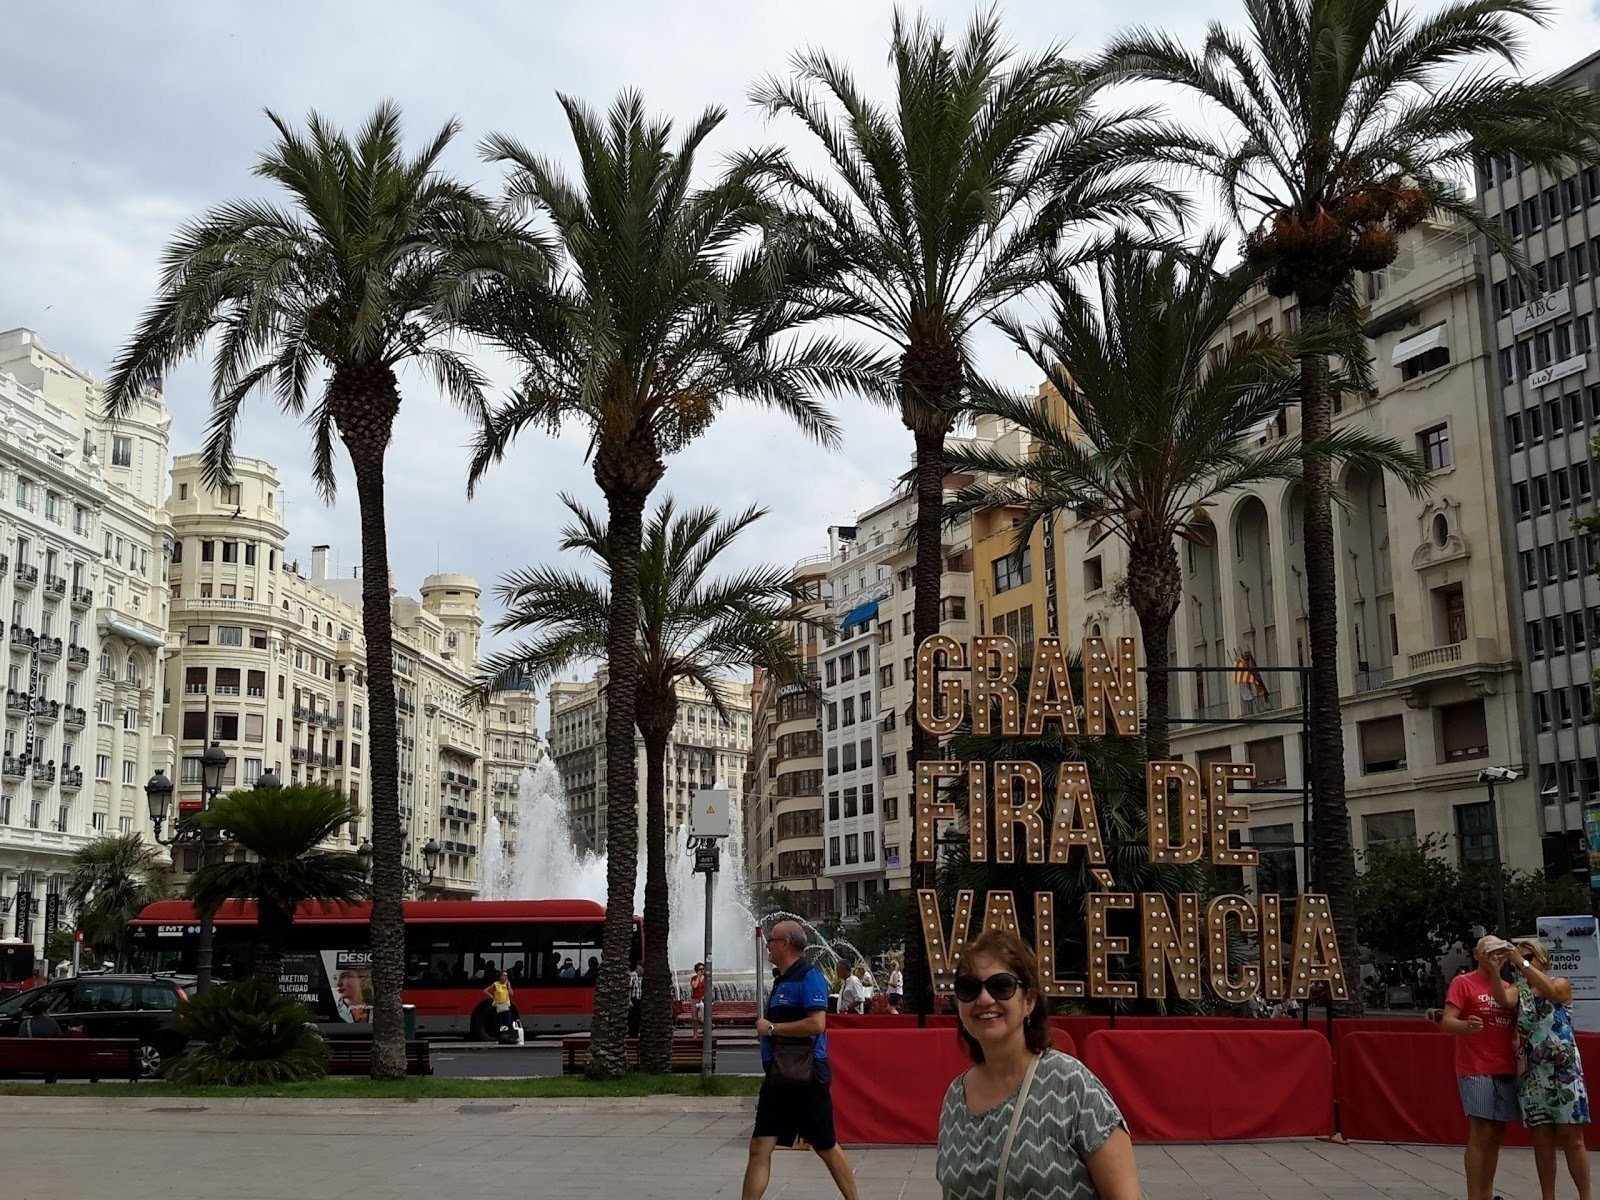 <span class="translation_missing" title="translation missing: en.meta.location_title, location_name: Pura Vida, city: Valencia">Location Title</span>